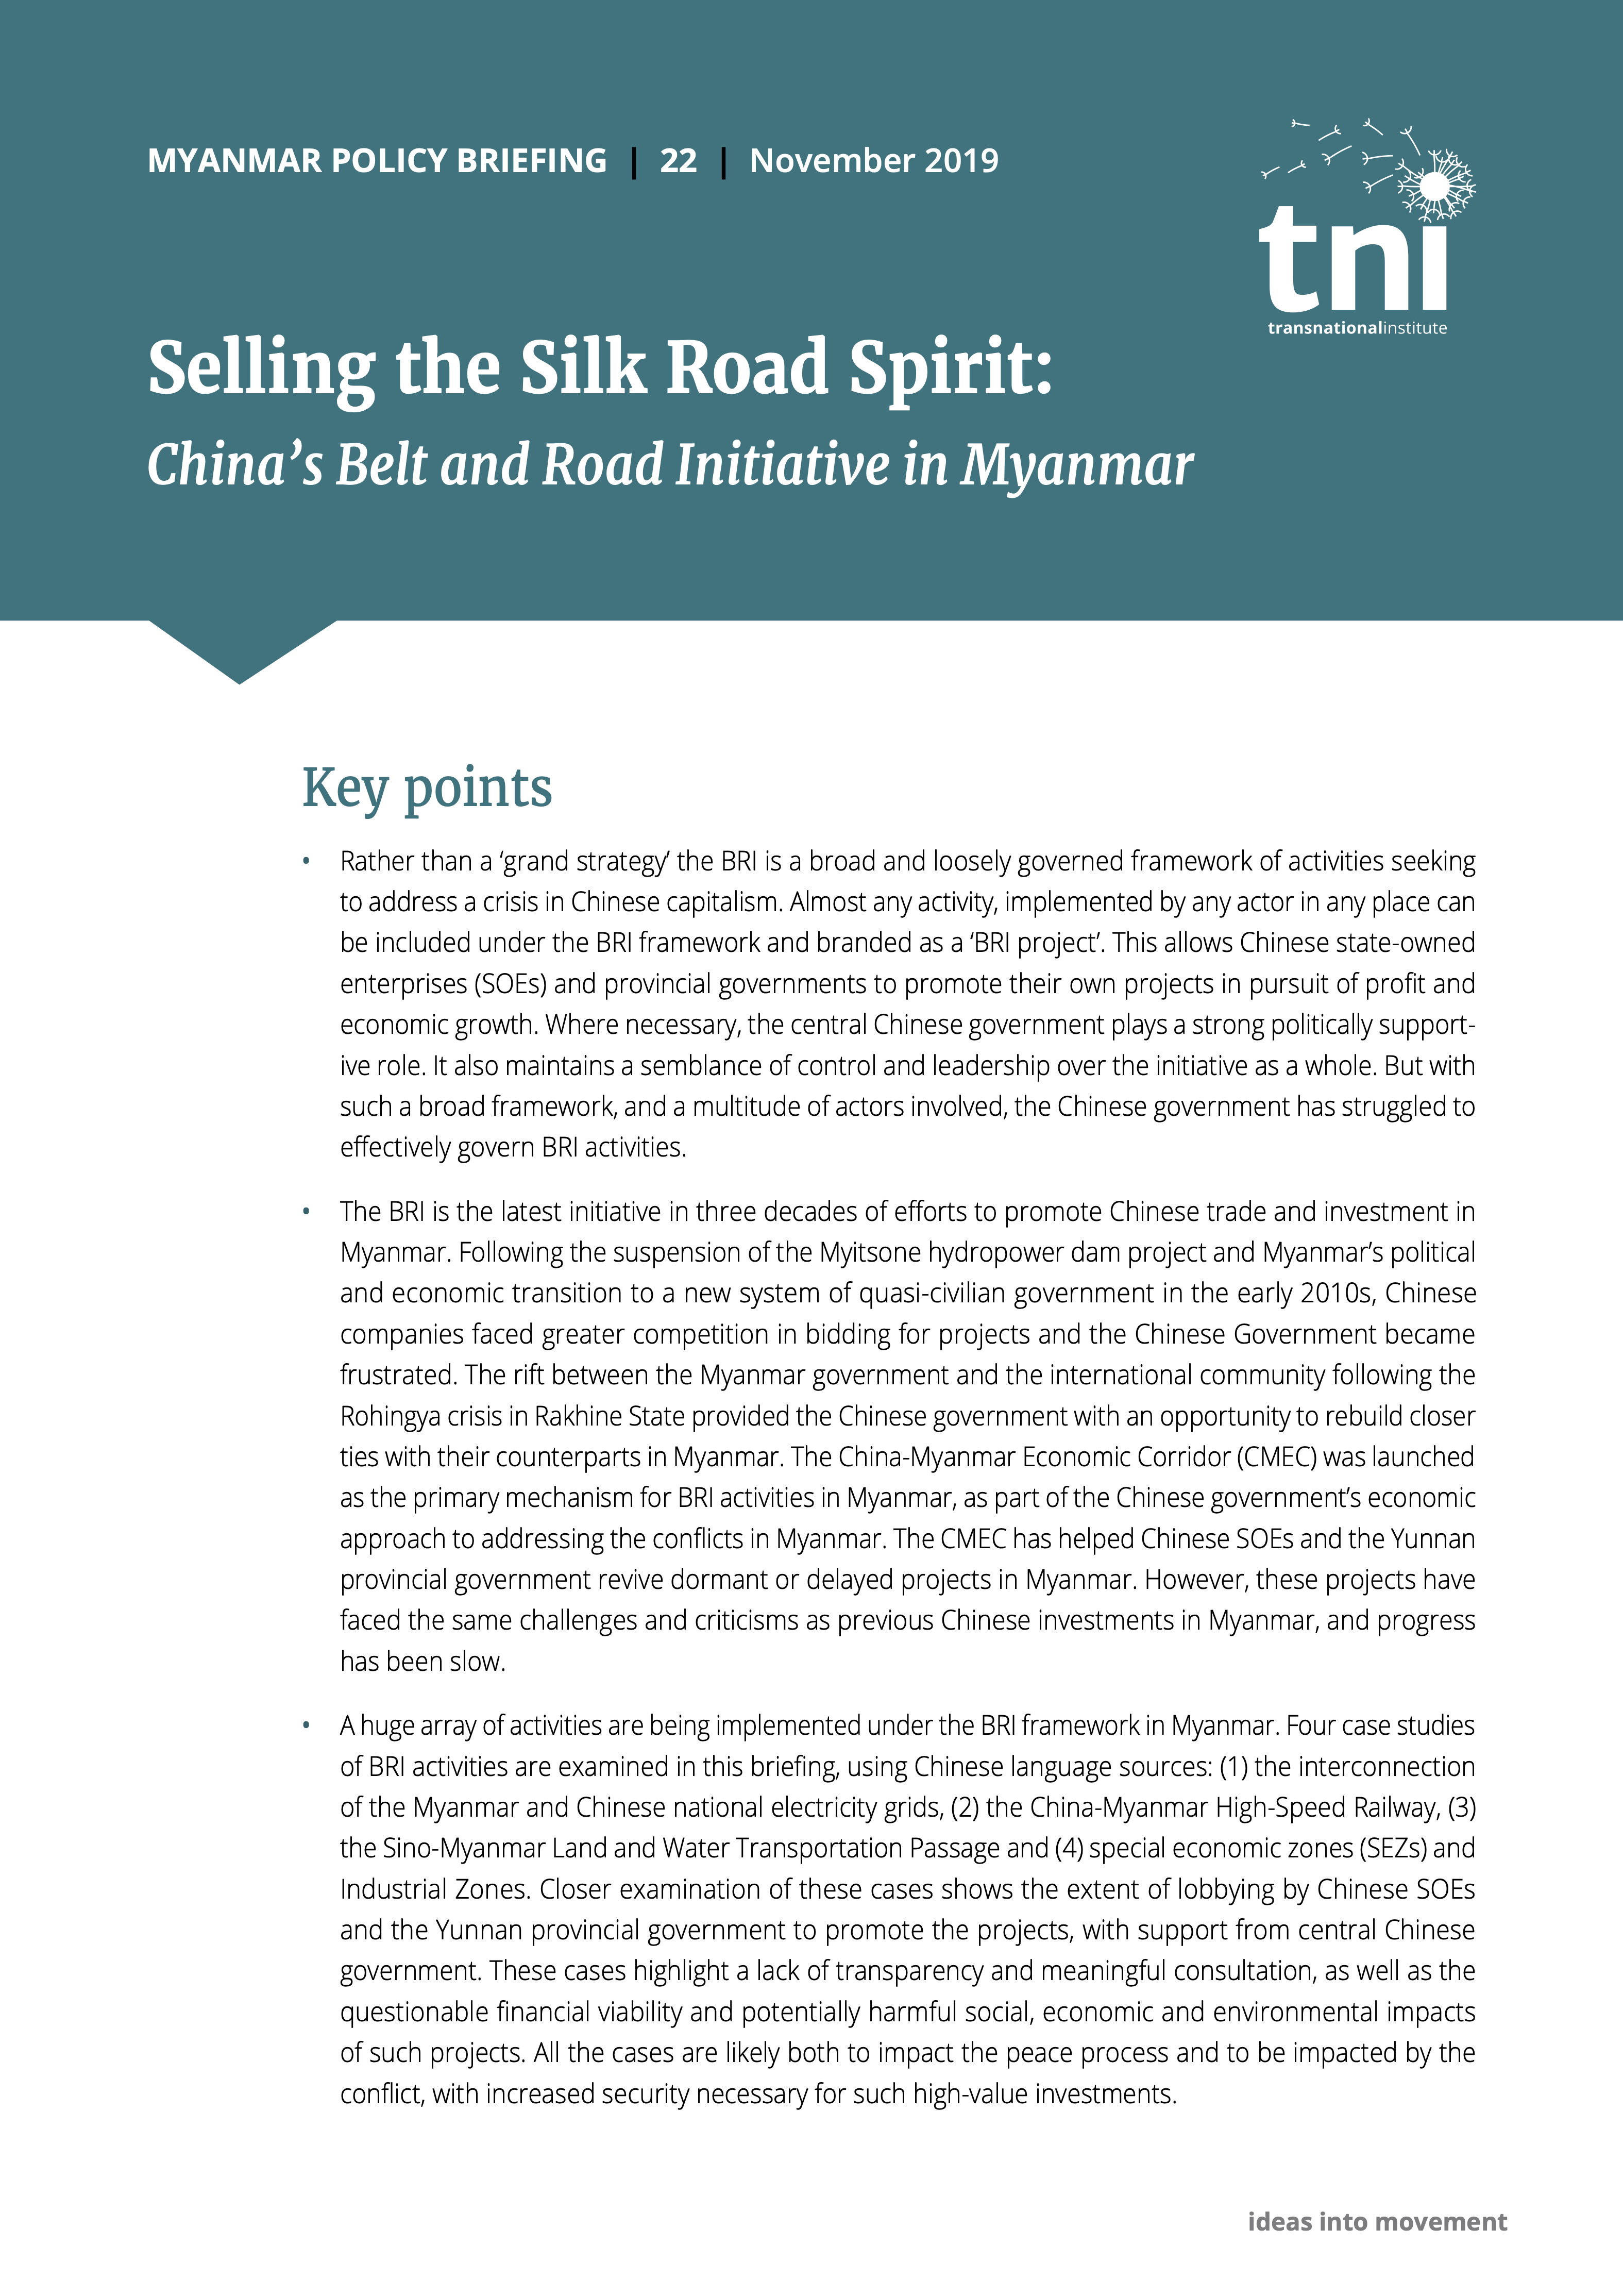 Selling The Silk Road Spirit Transnational Institute